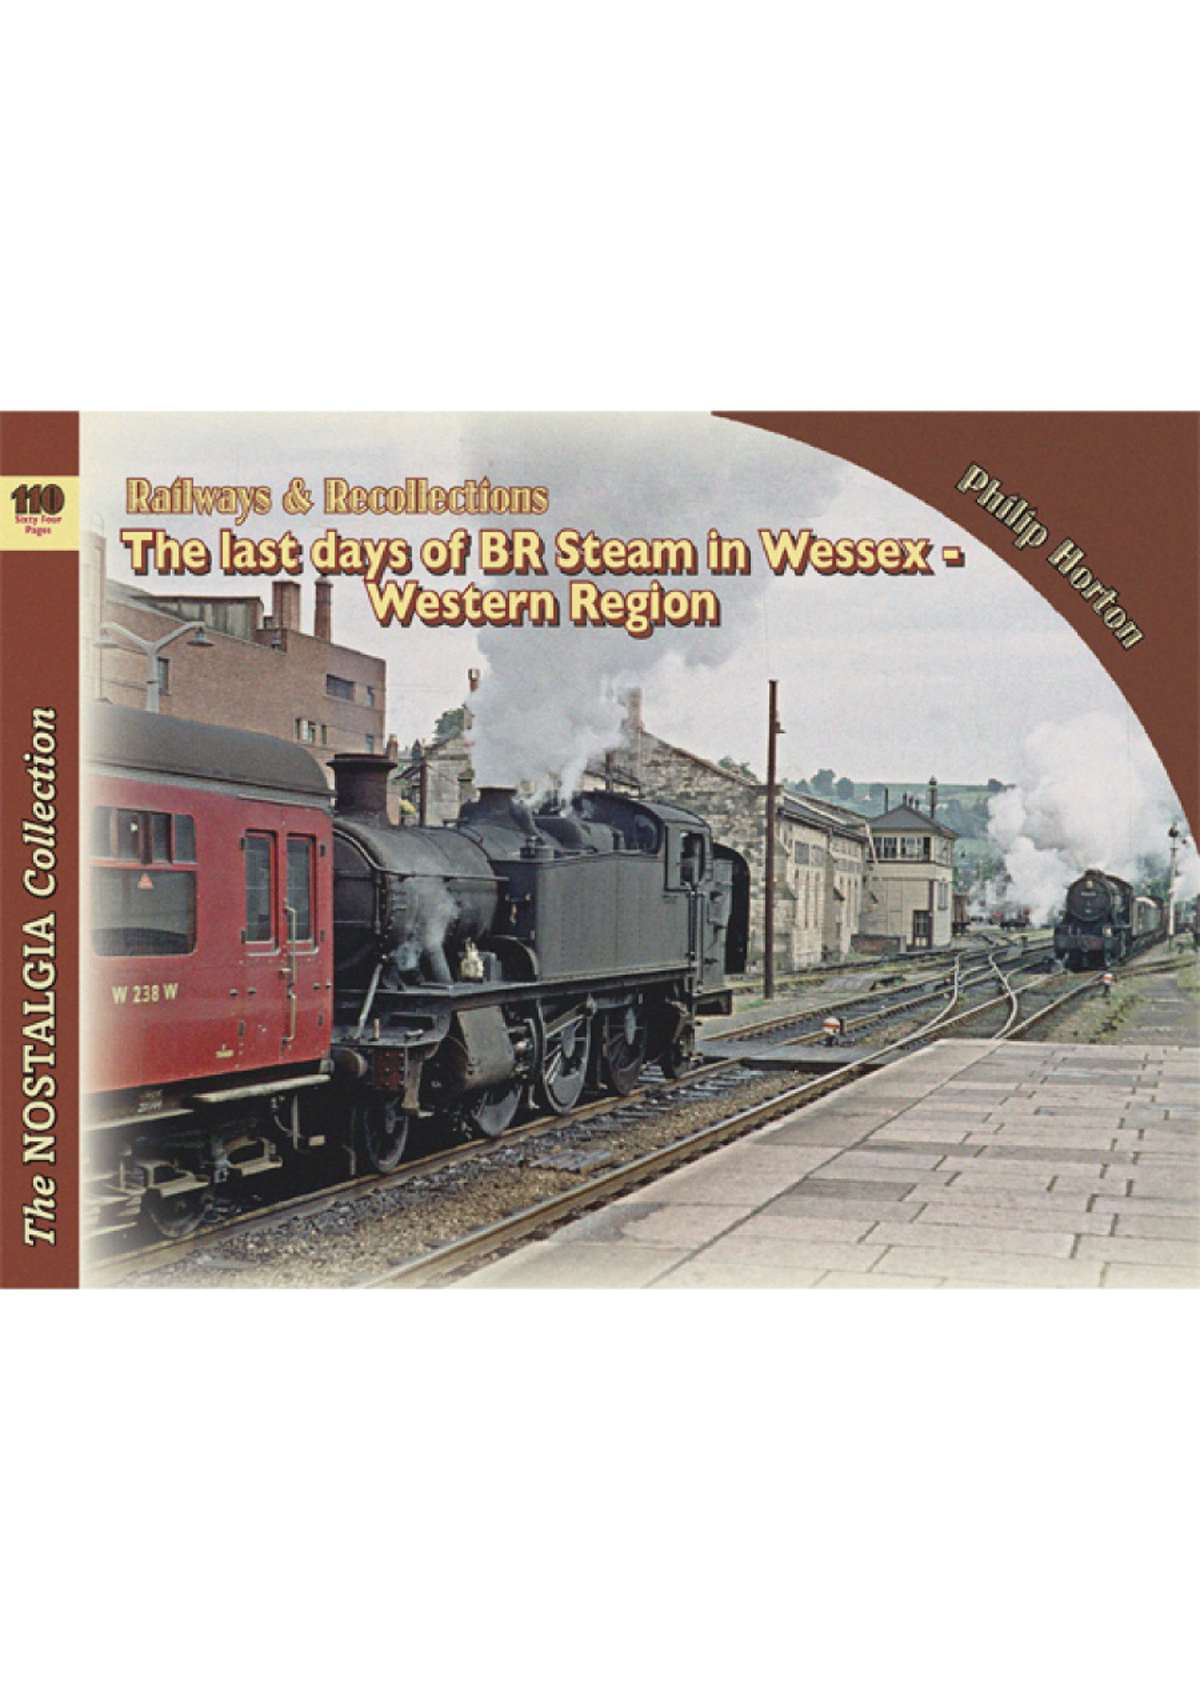 Last Years of BR Steam in Wessex- Western Region, The.